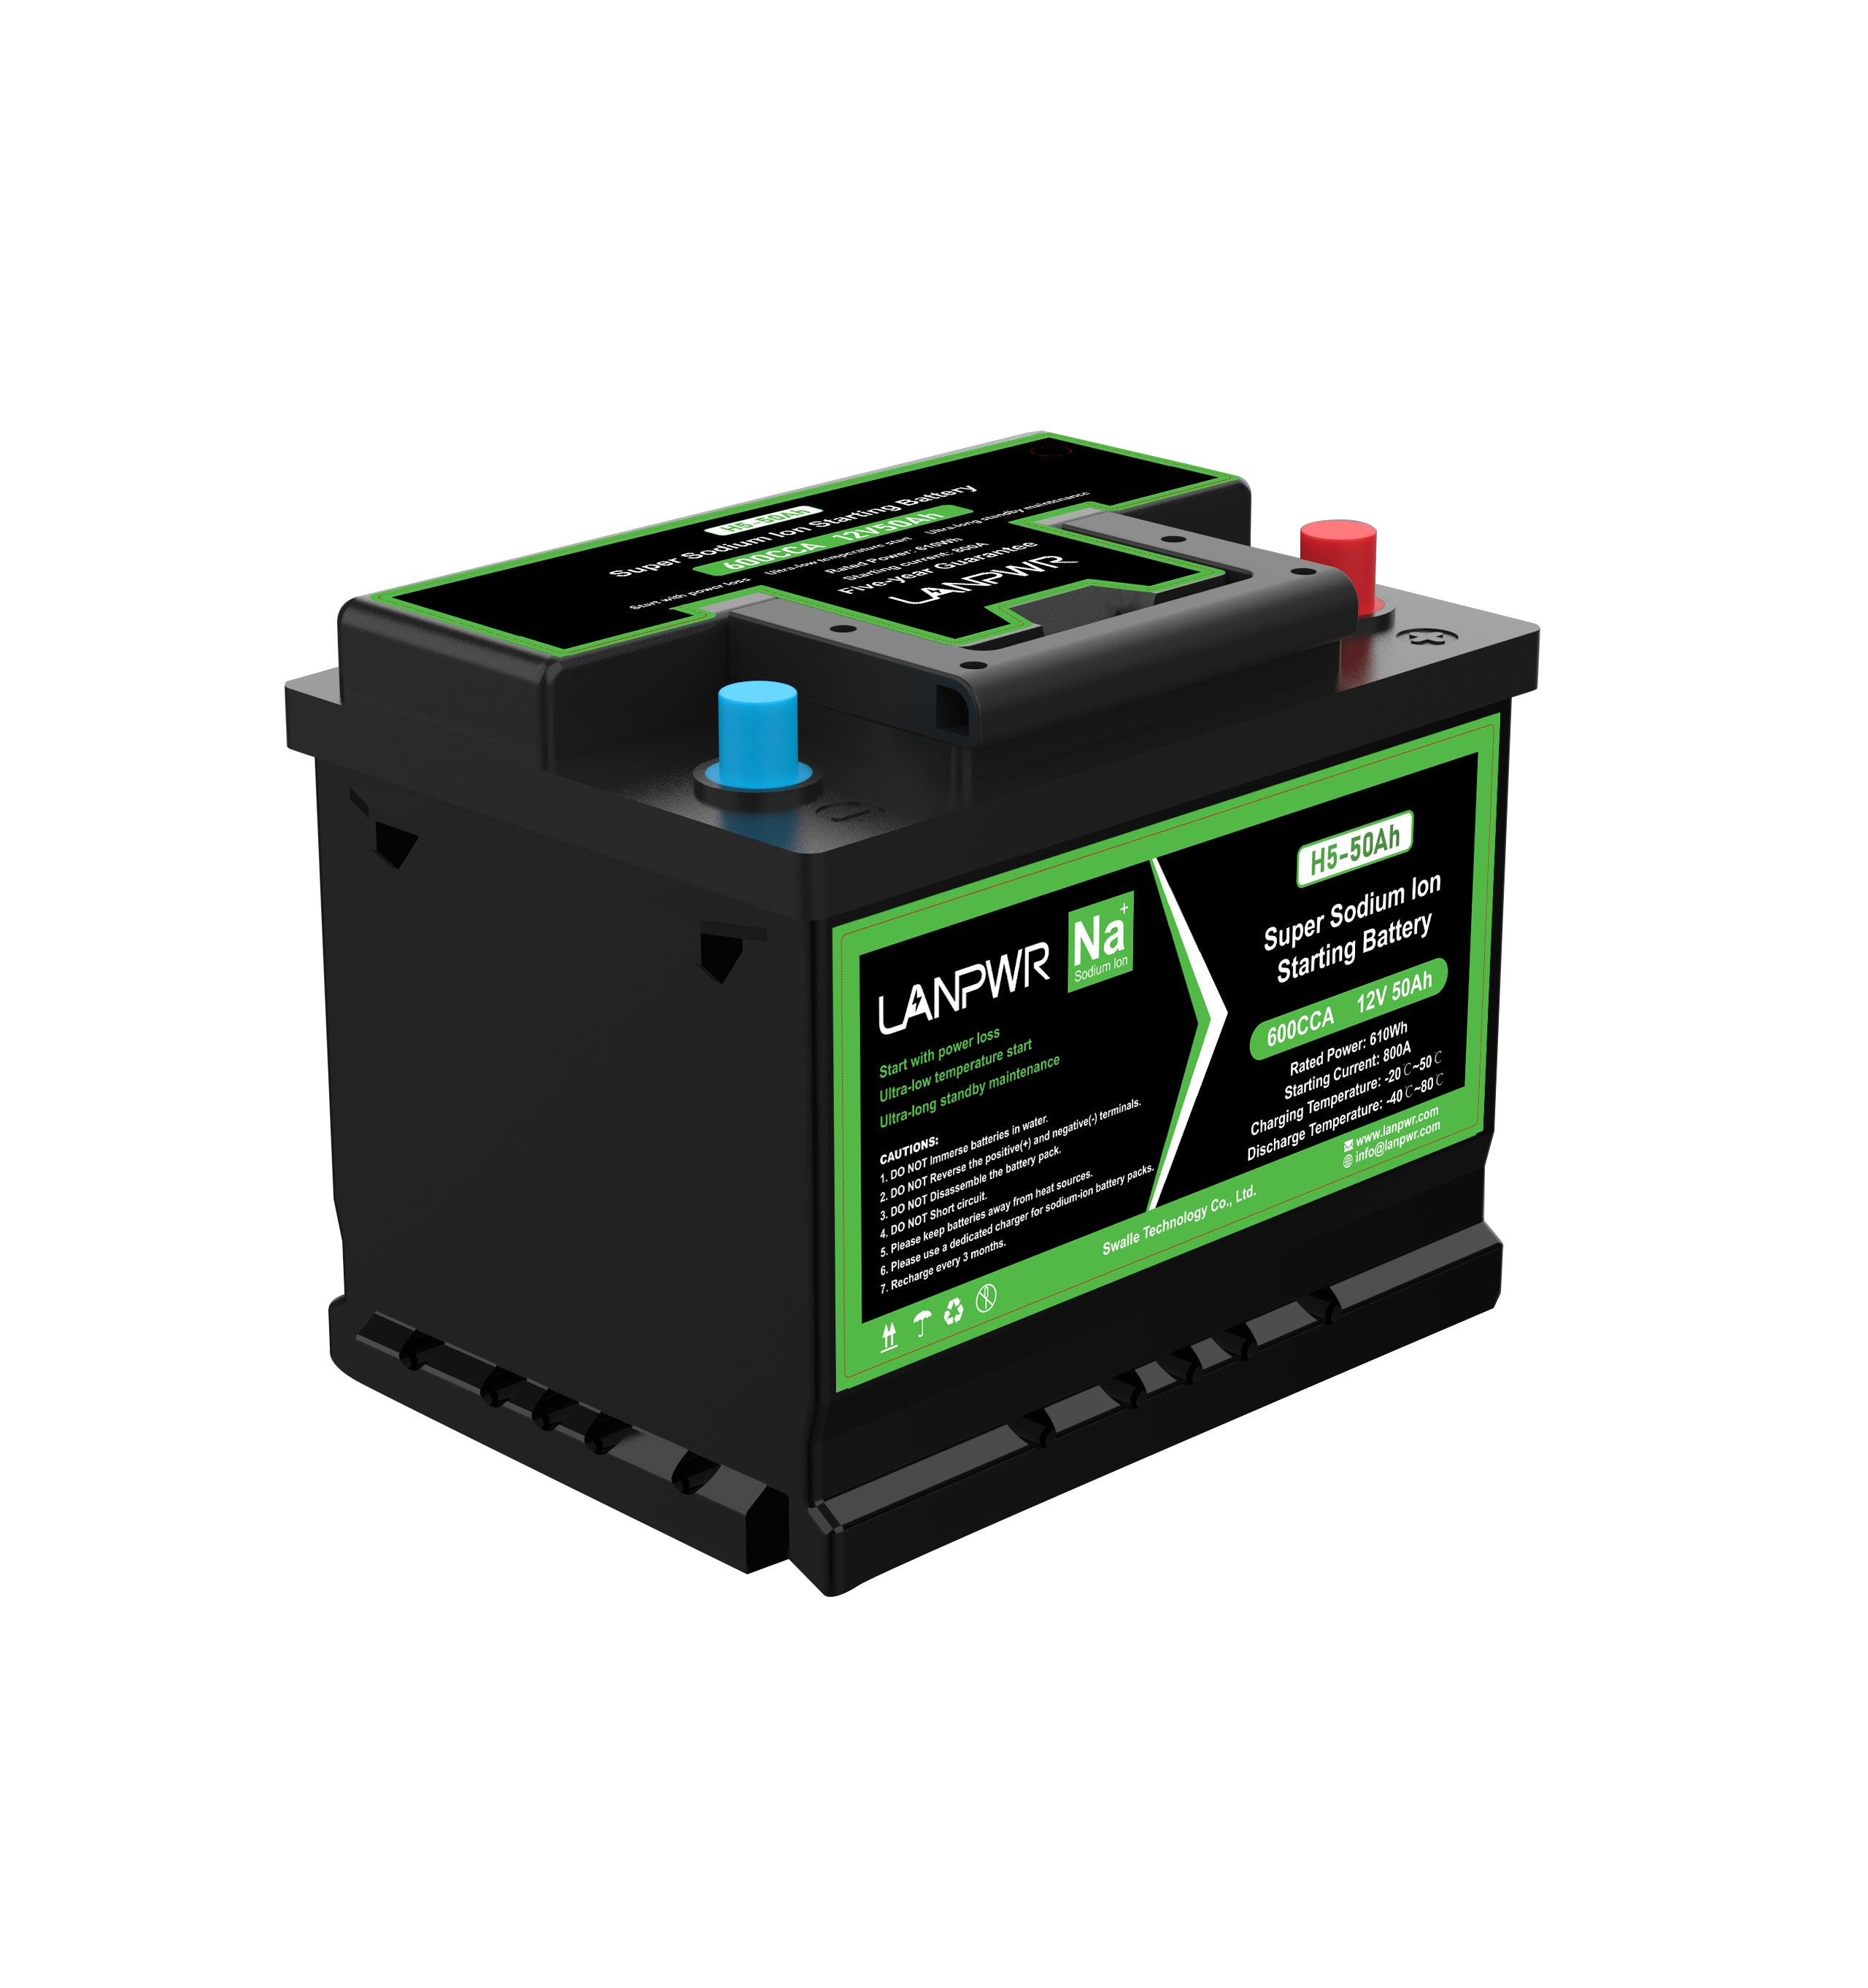 LANPWR Sodium Ion Starting Battery 12V 50Ah 610Wh